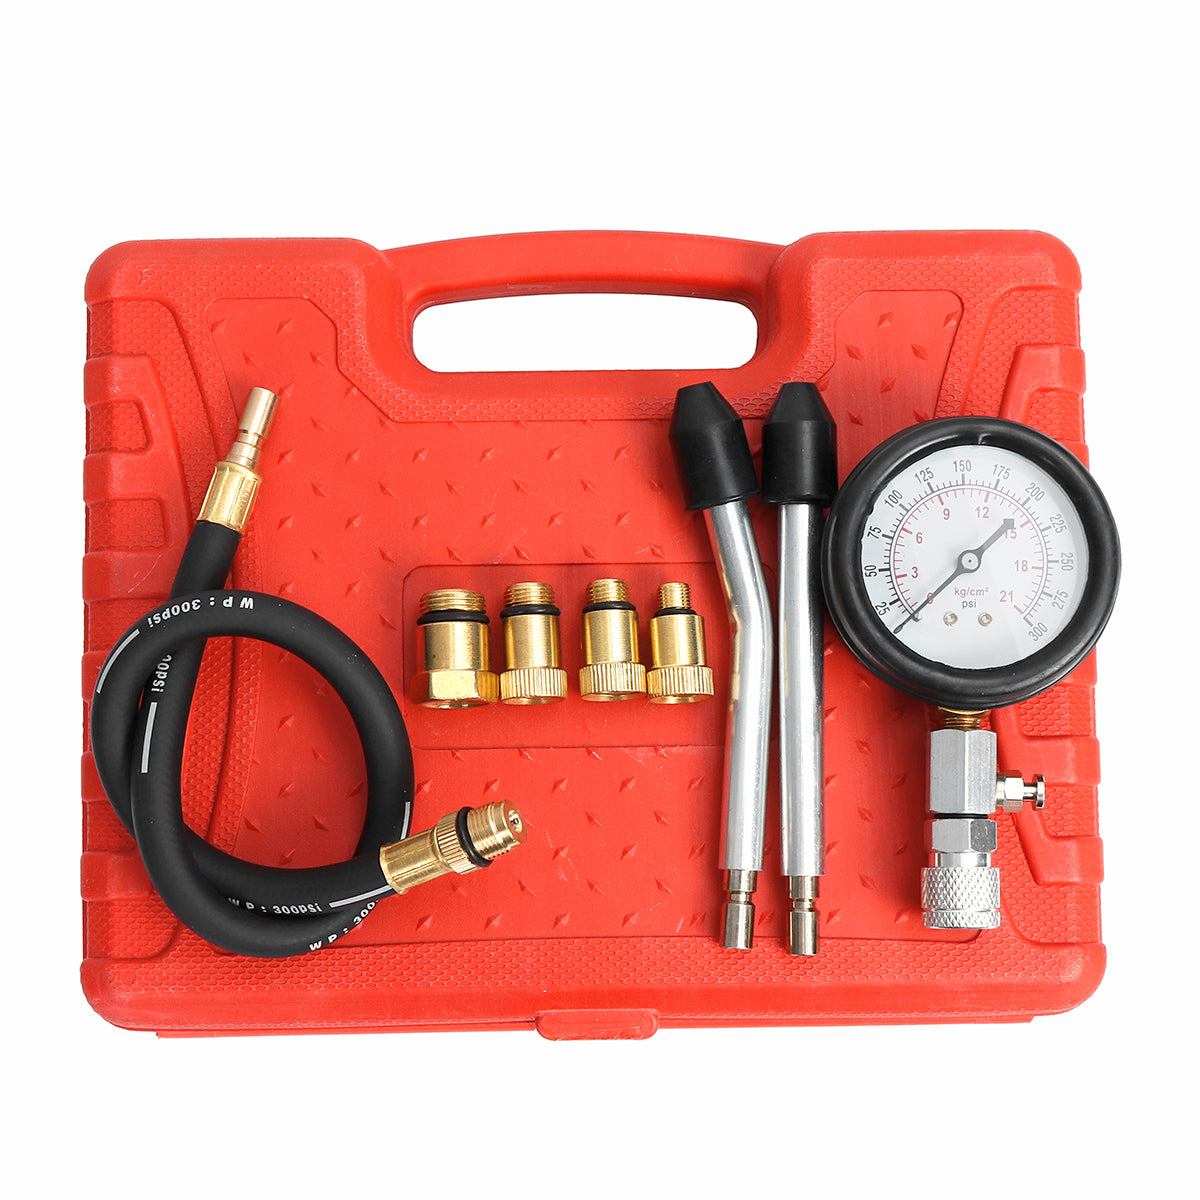 Chocolate Petrol Engine Cylinder Pressure Gauge Diagnostic Tool Compression Tester For Motorcycle Car